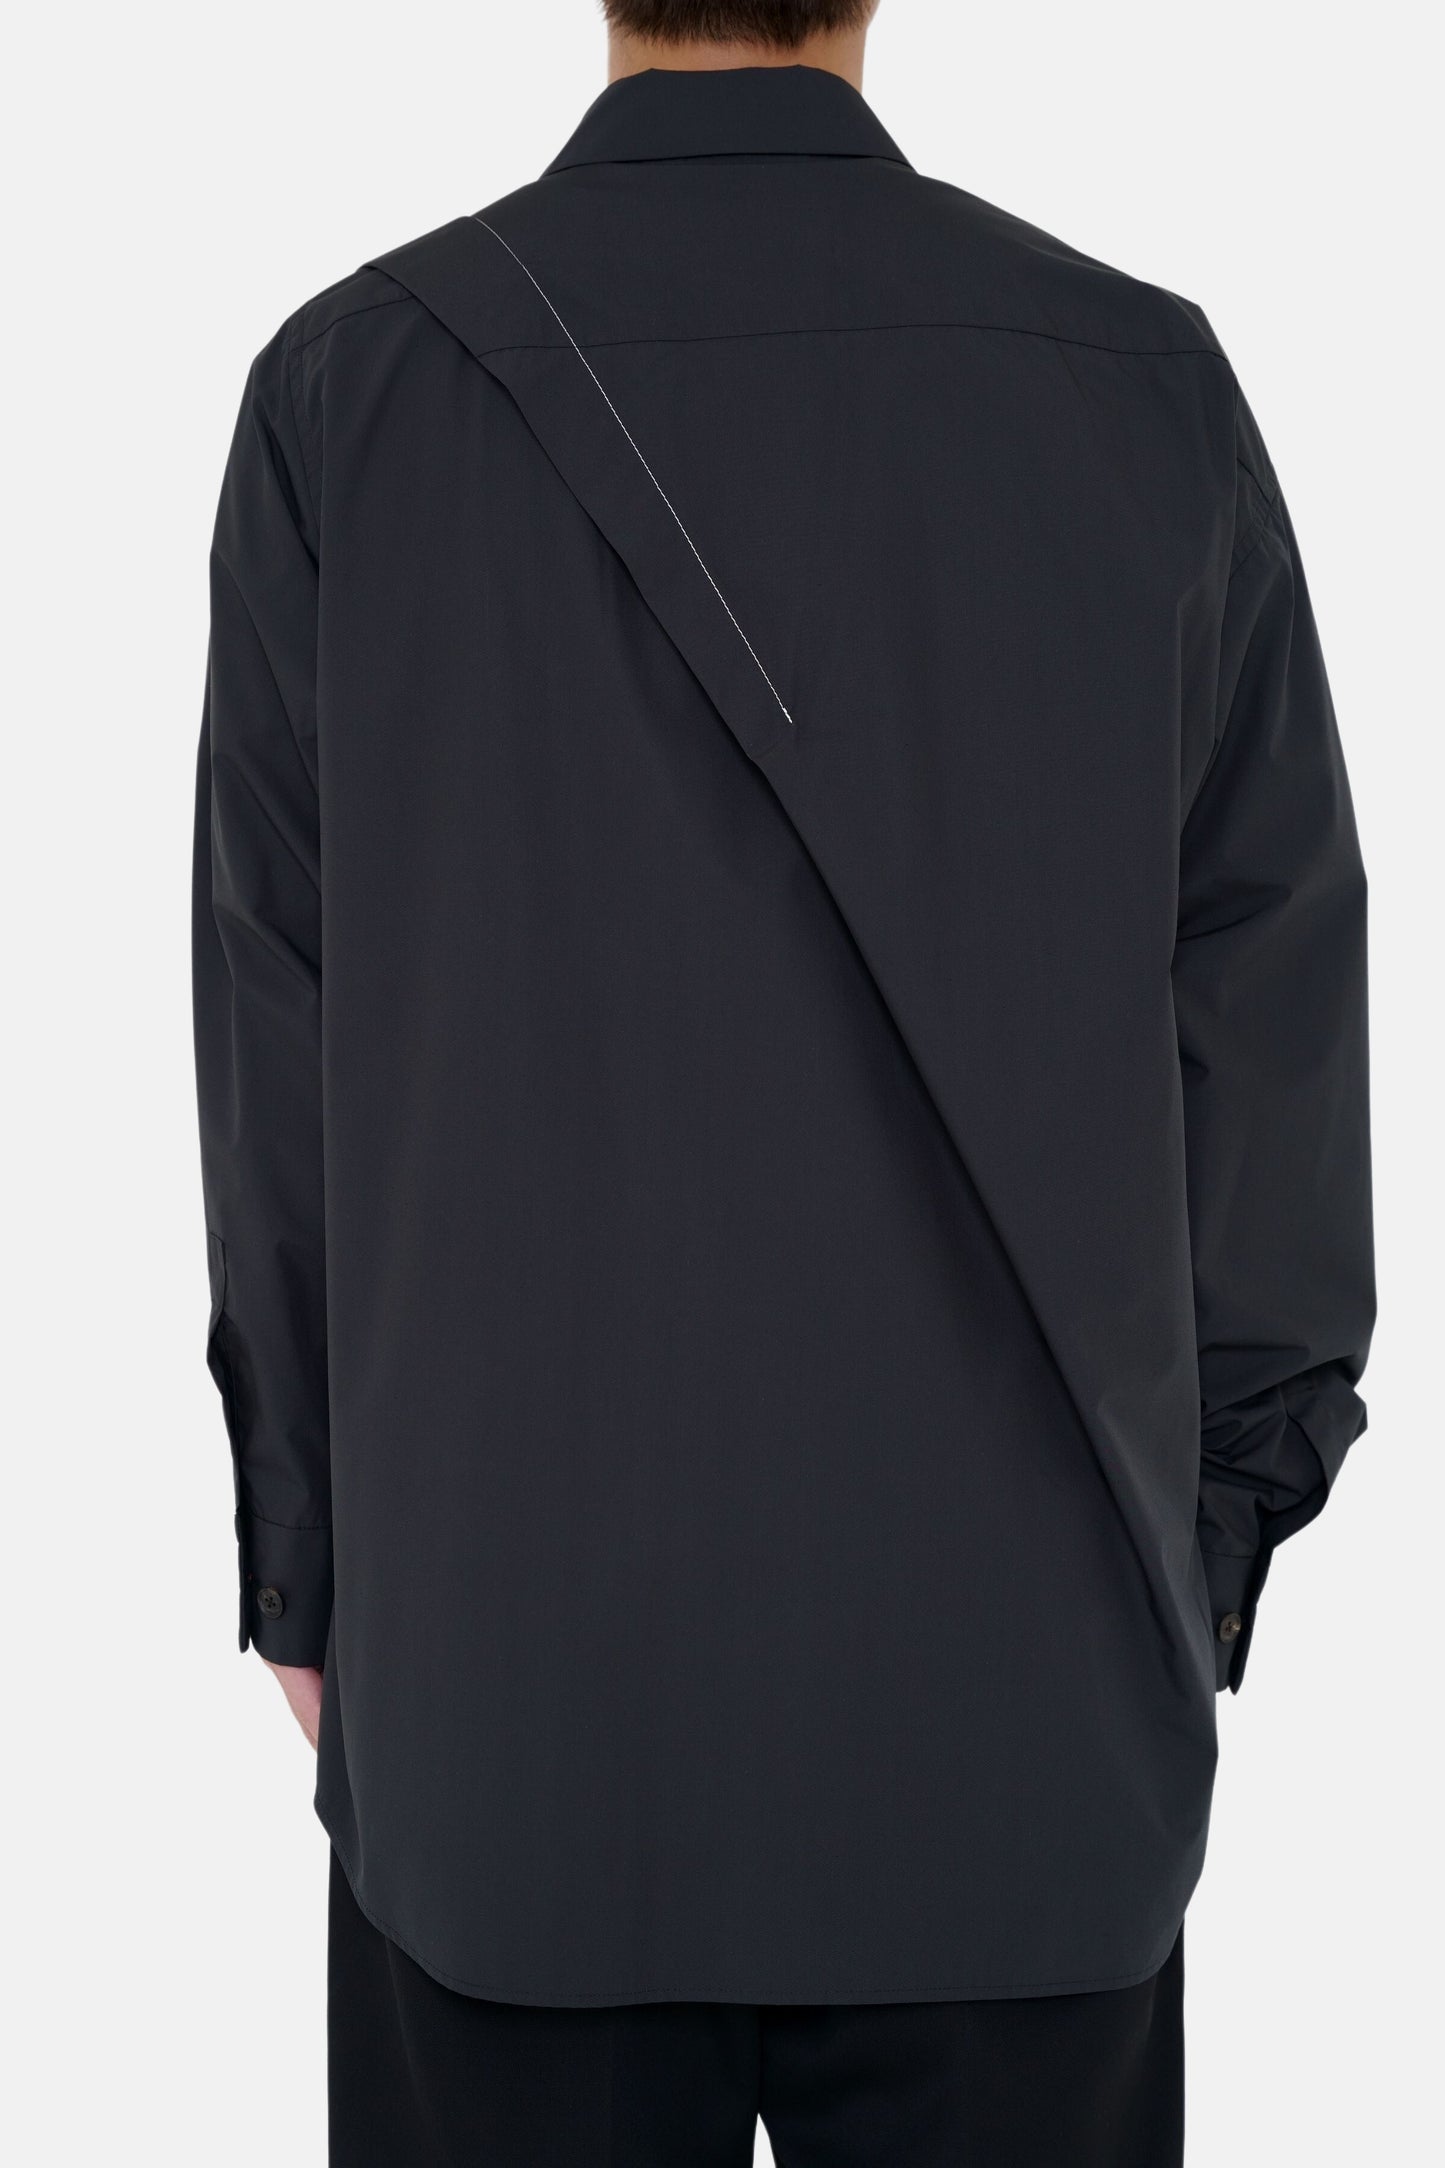 Oversized Tuck Shirt - Black